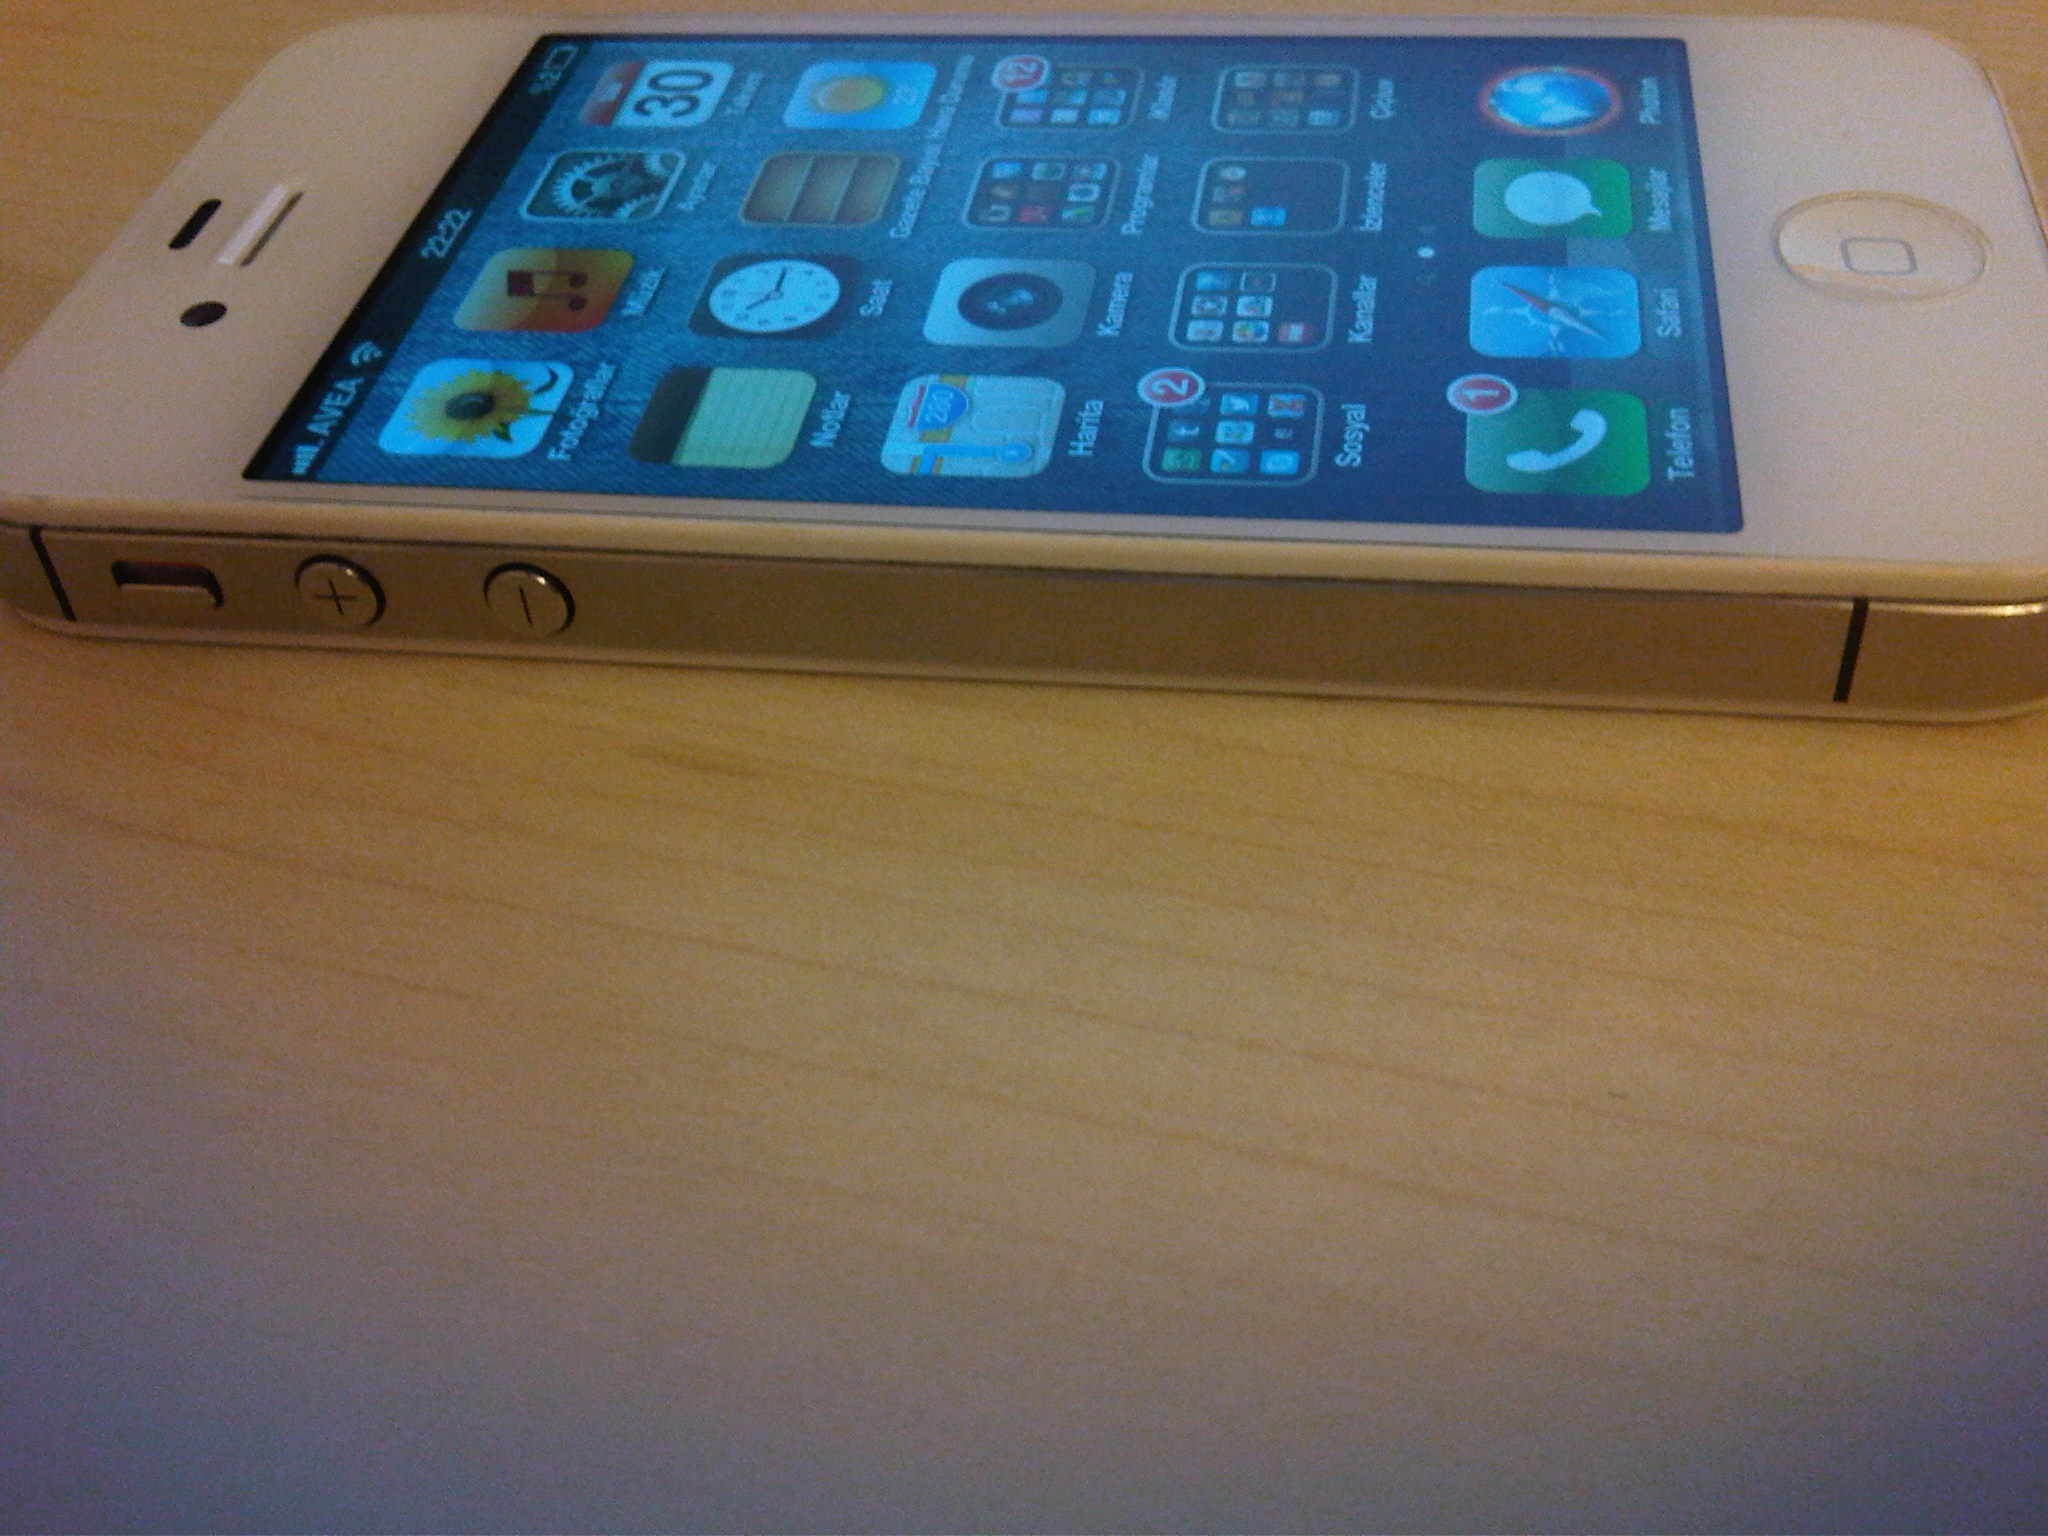  iPhone 4S Beyaz 32GB